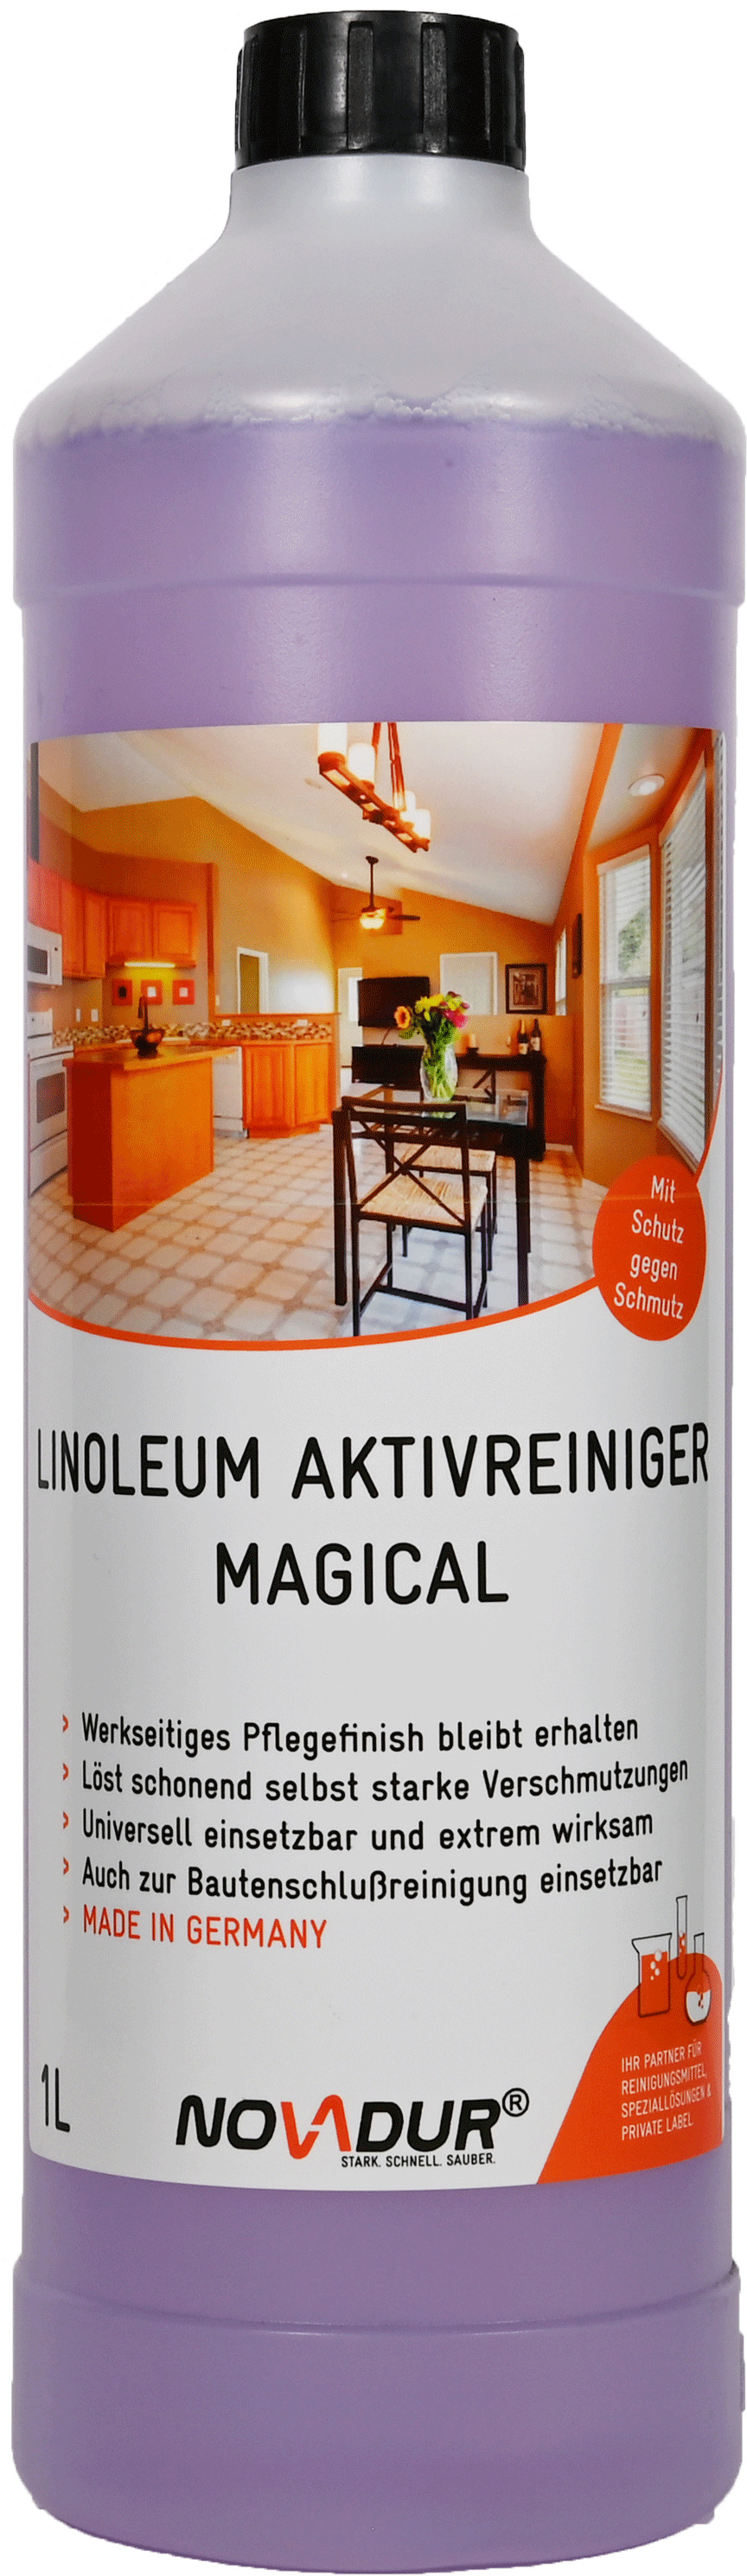 Linoleum Aktivreiniger Magical